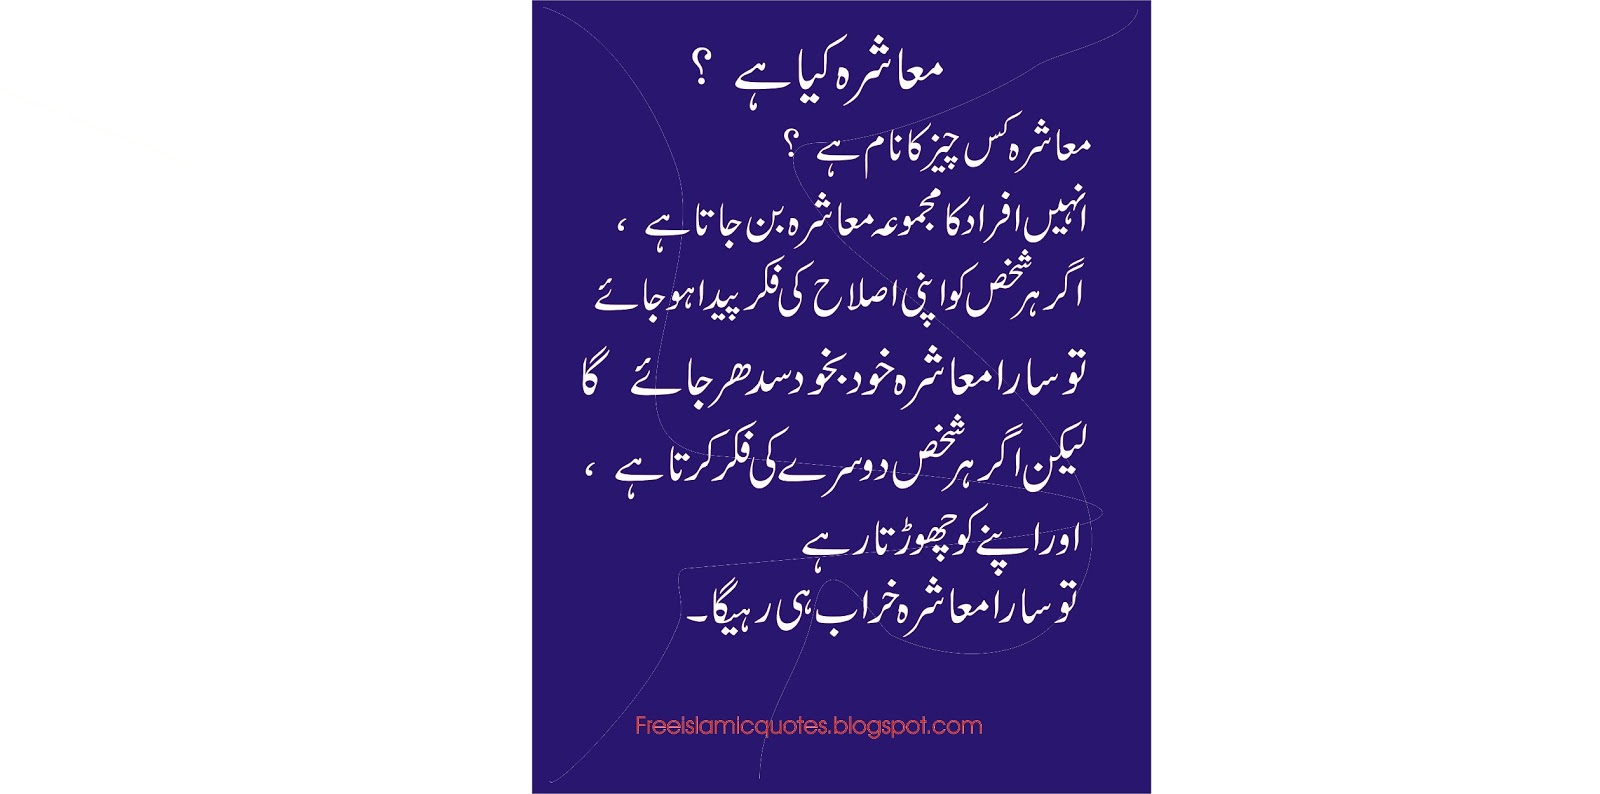 Islamic Quotes Urdu Wallpapers Beautiful   Doblelolcom